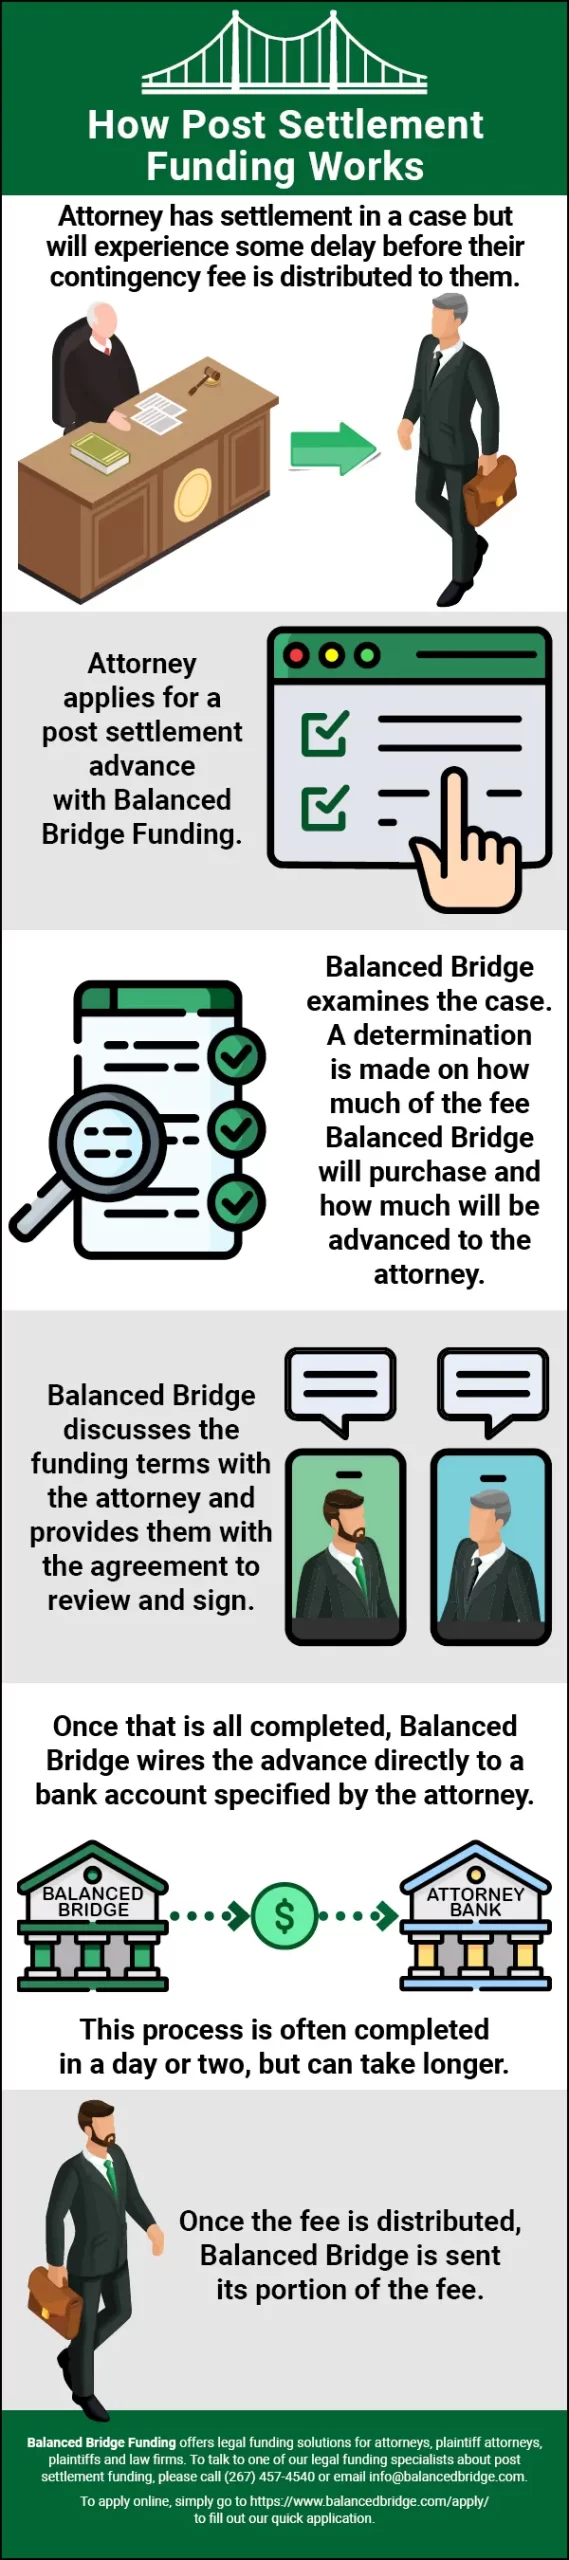 how post settlement funding for 18 wheeler accidents works. Balanced bridge funding offers post settlement funding for 18 wheeler accidents